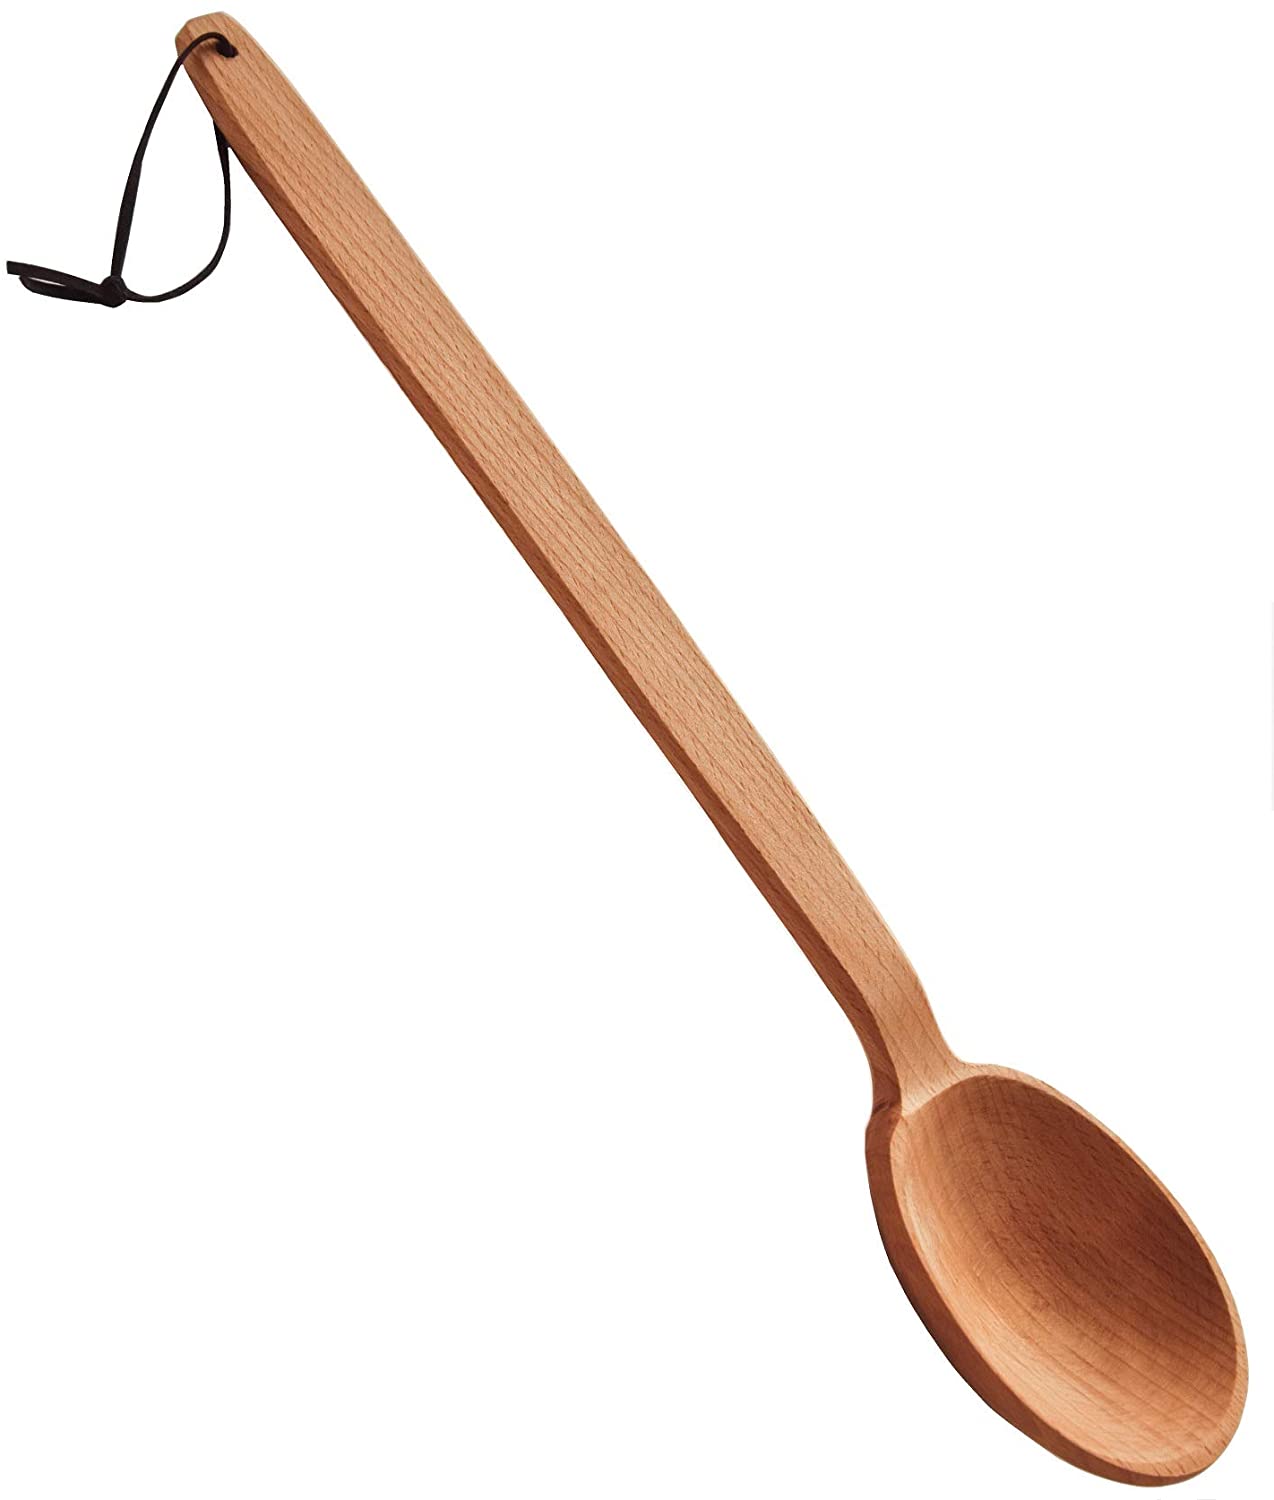 Long handled wooden spoon